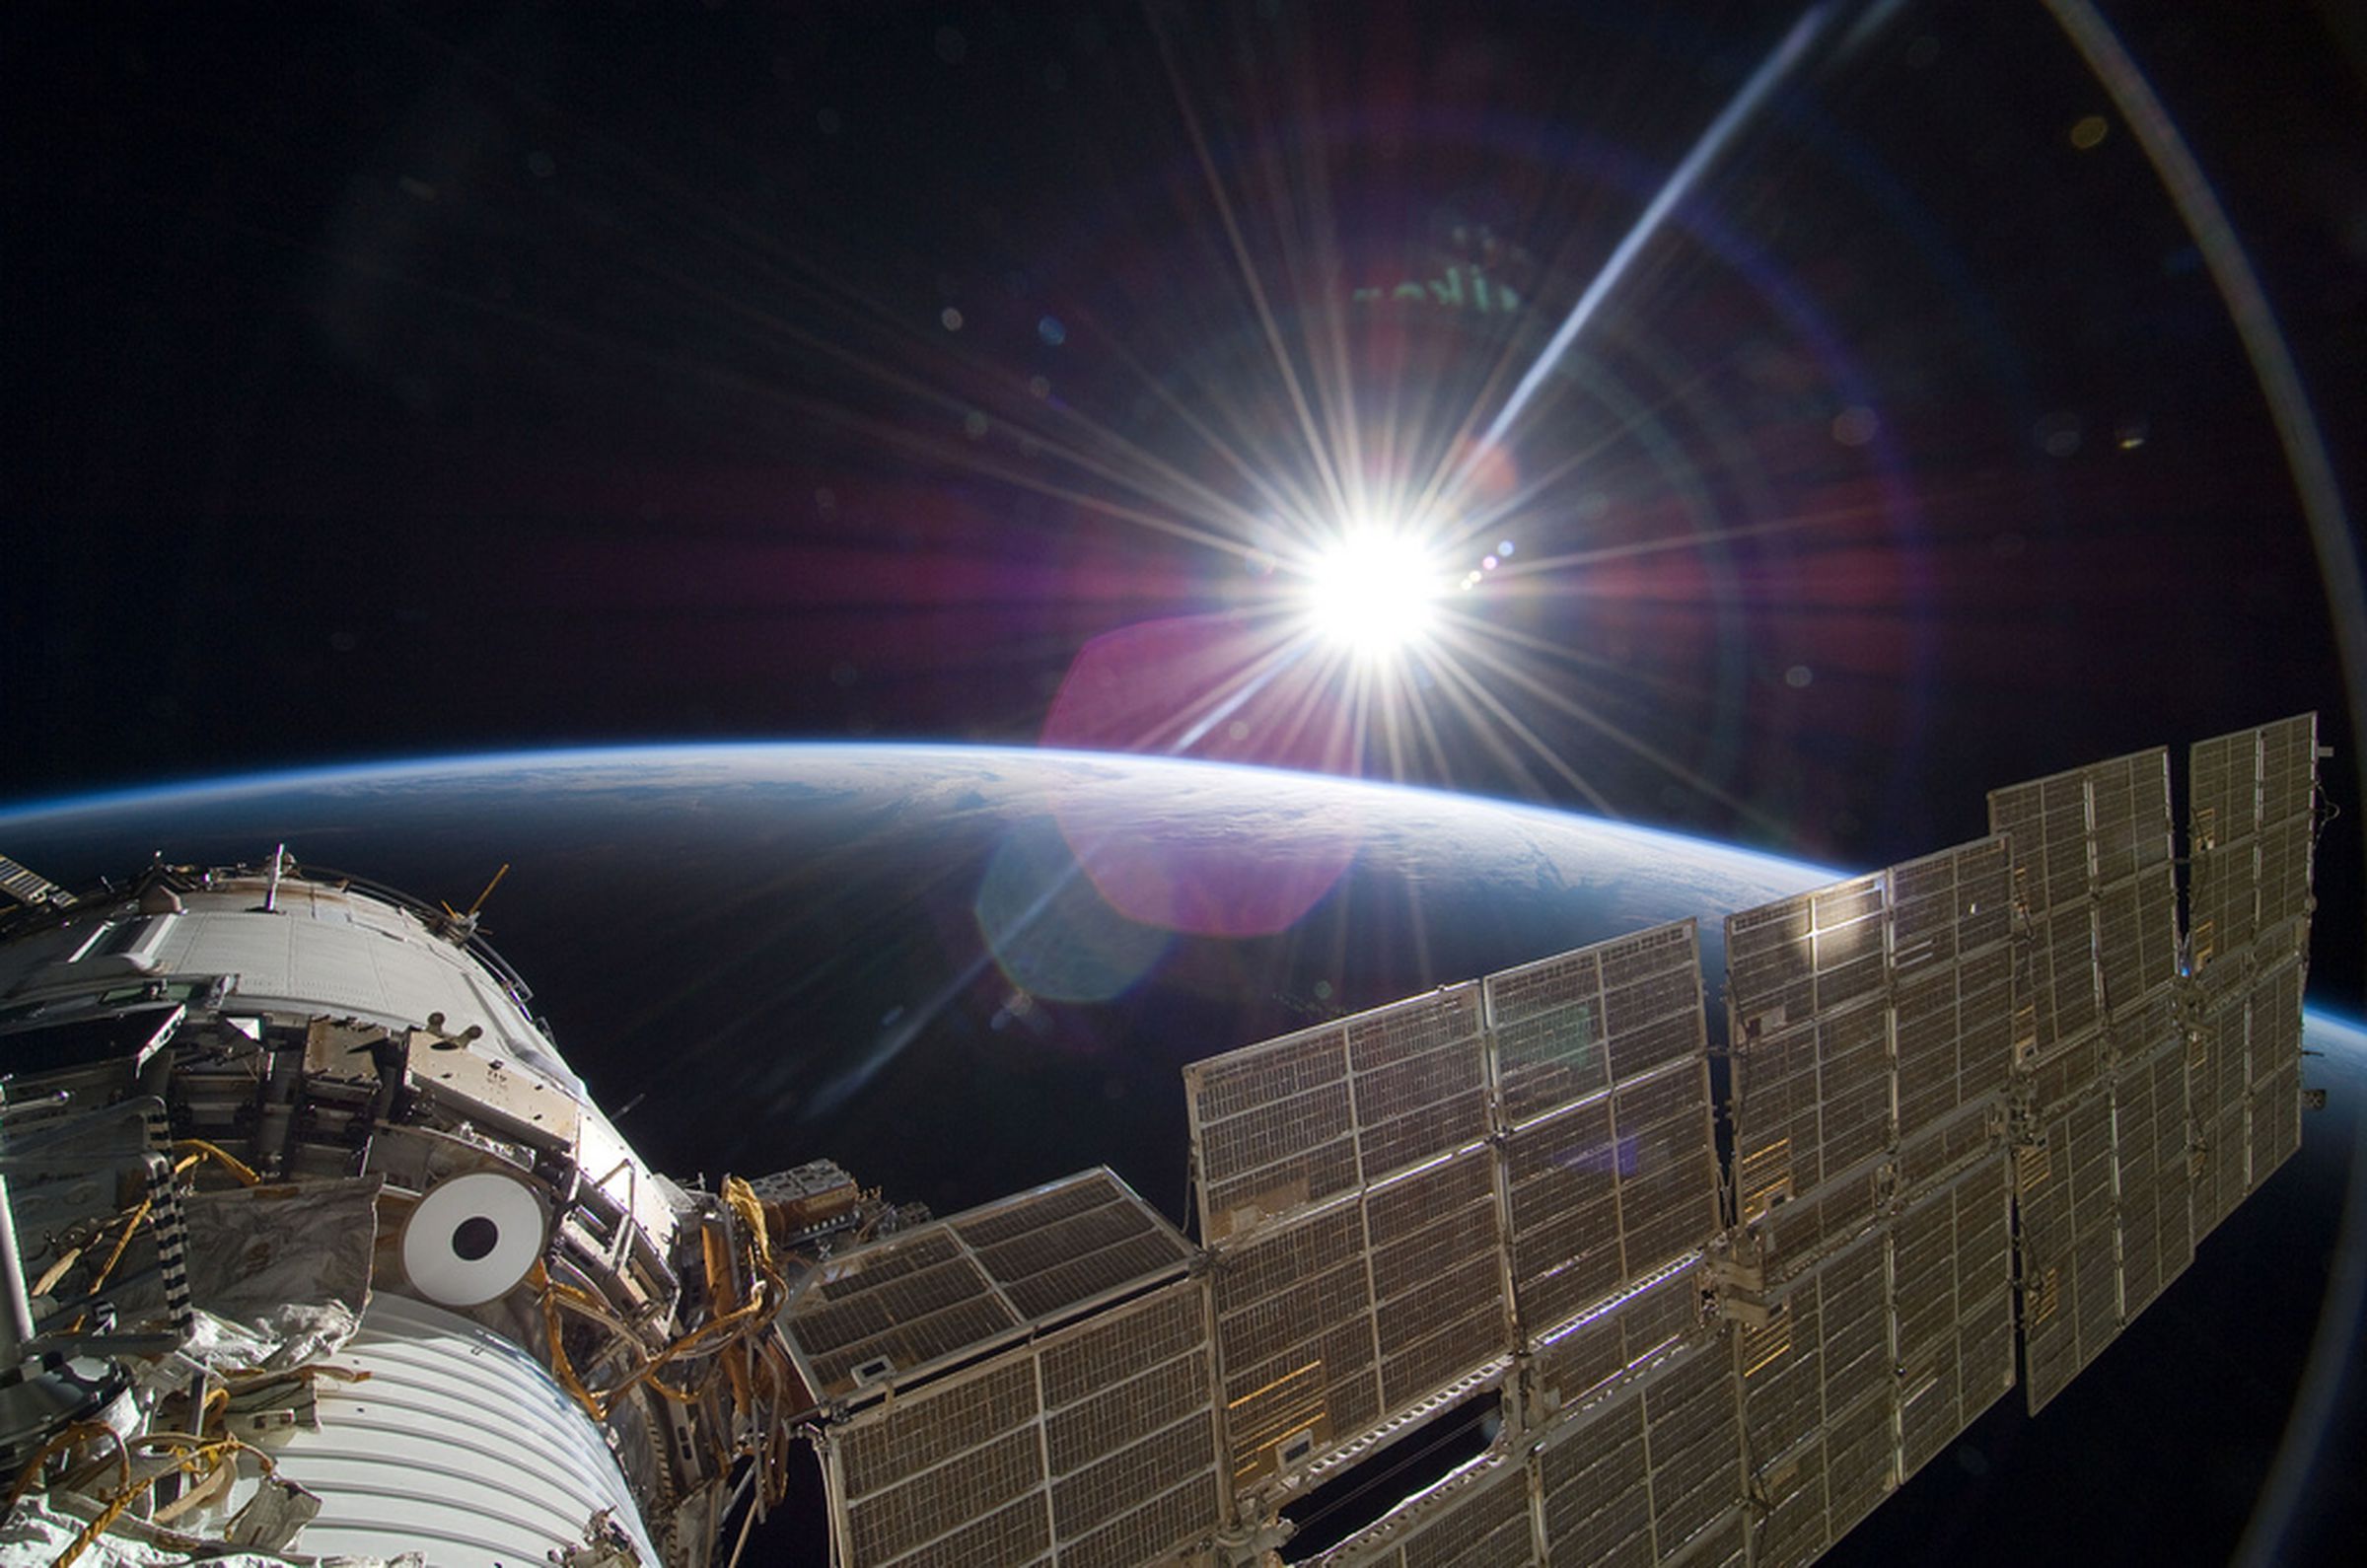 NASA's 'Gravity'-inspired photo set